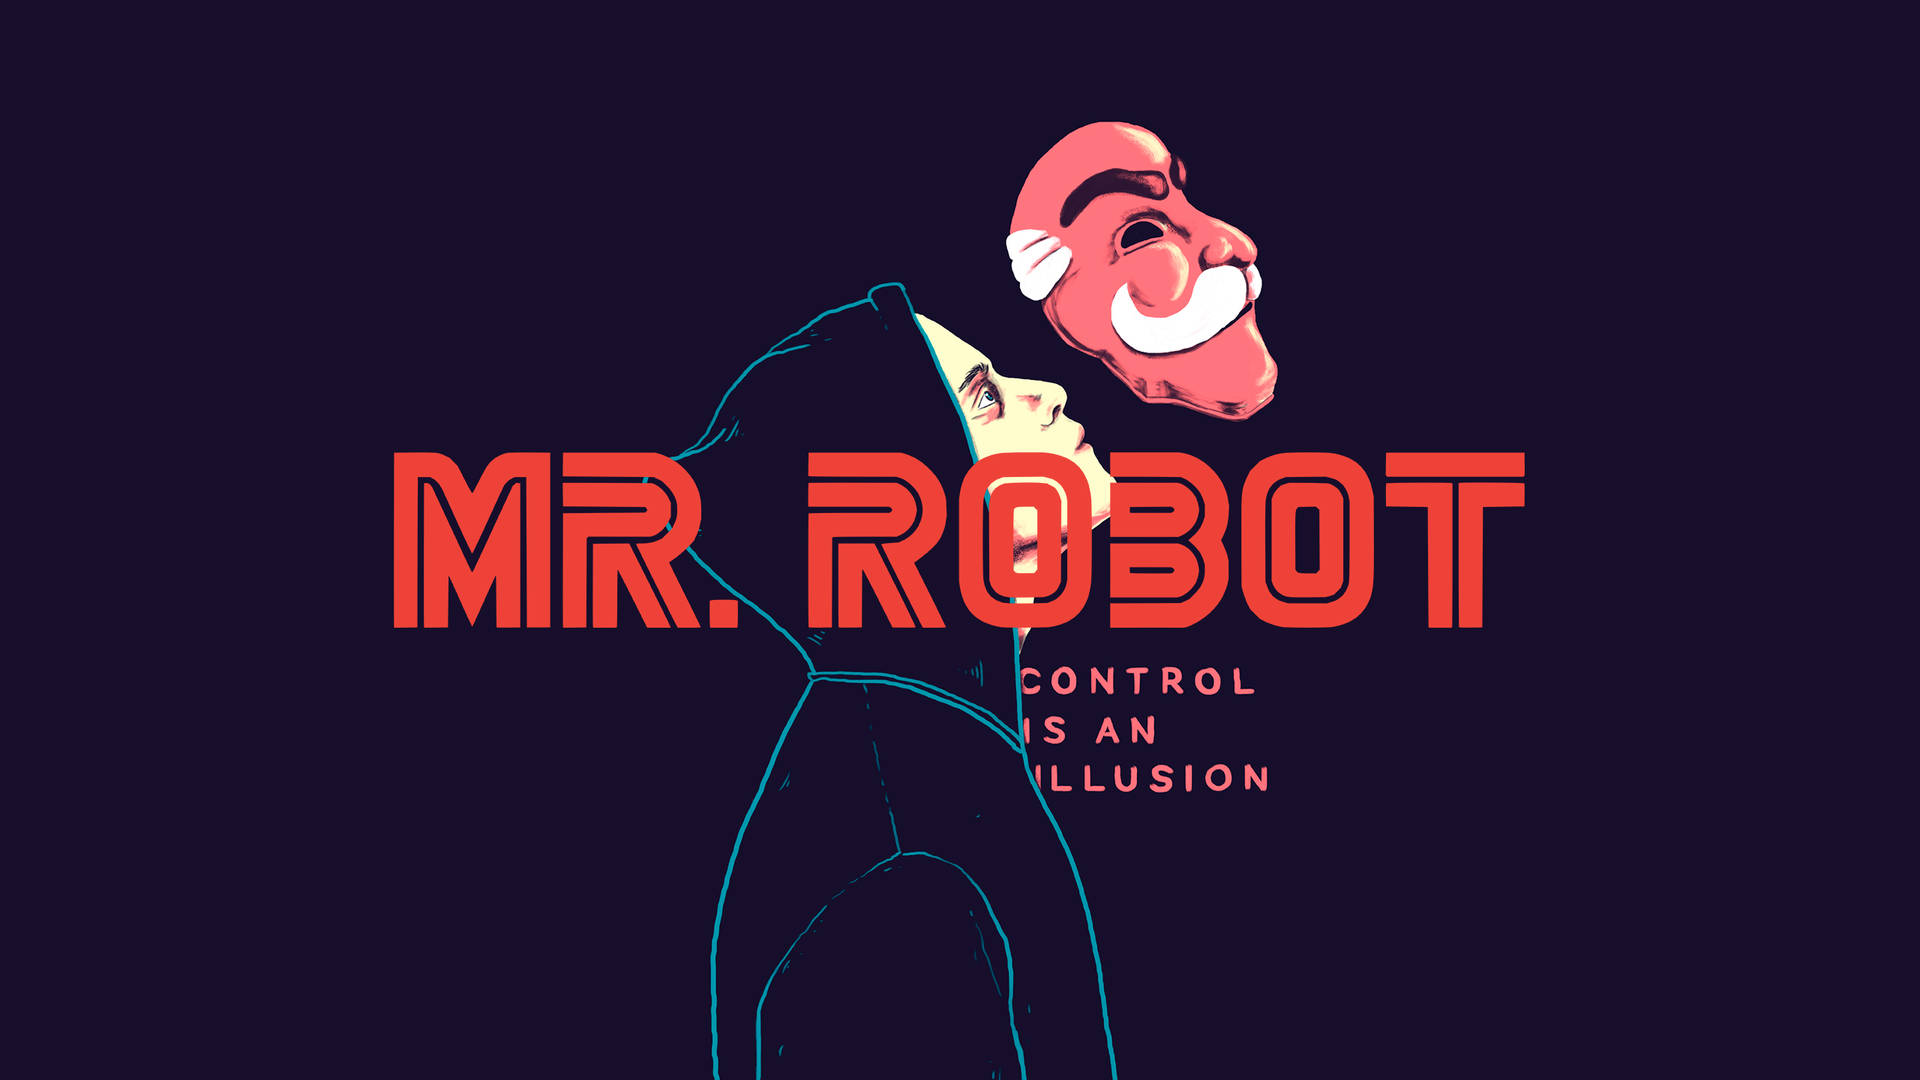 Mr. Robot Control Illusion Wallpaper